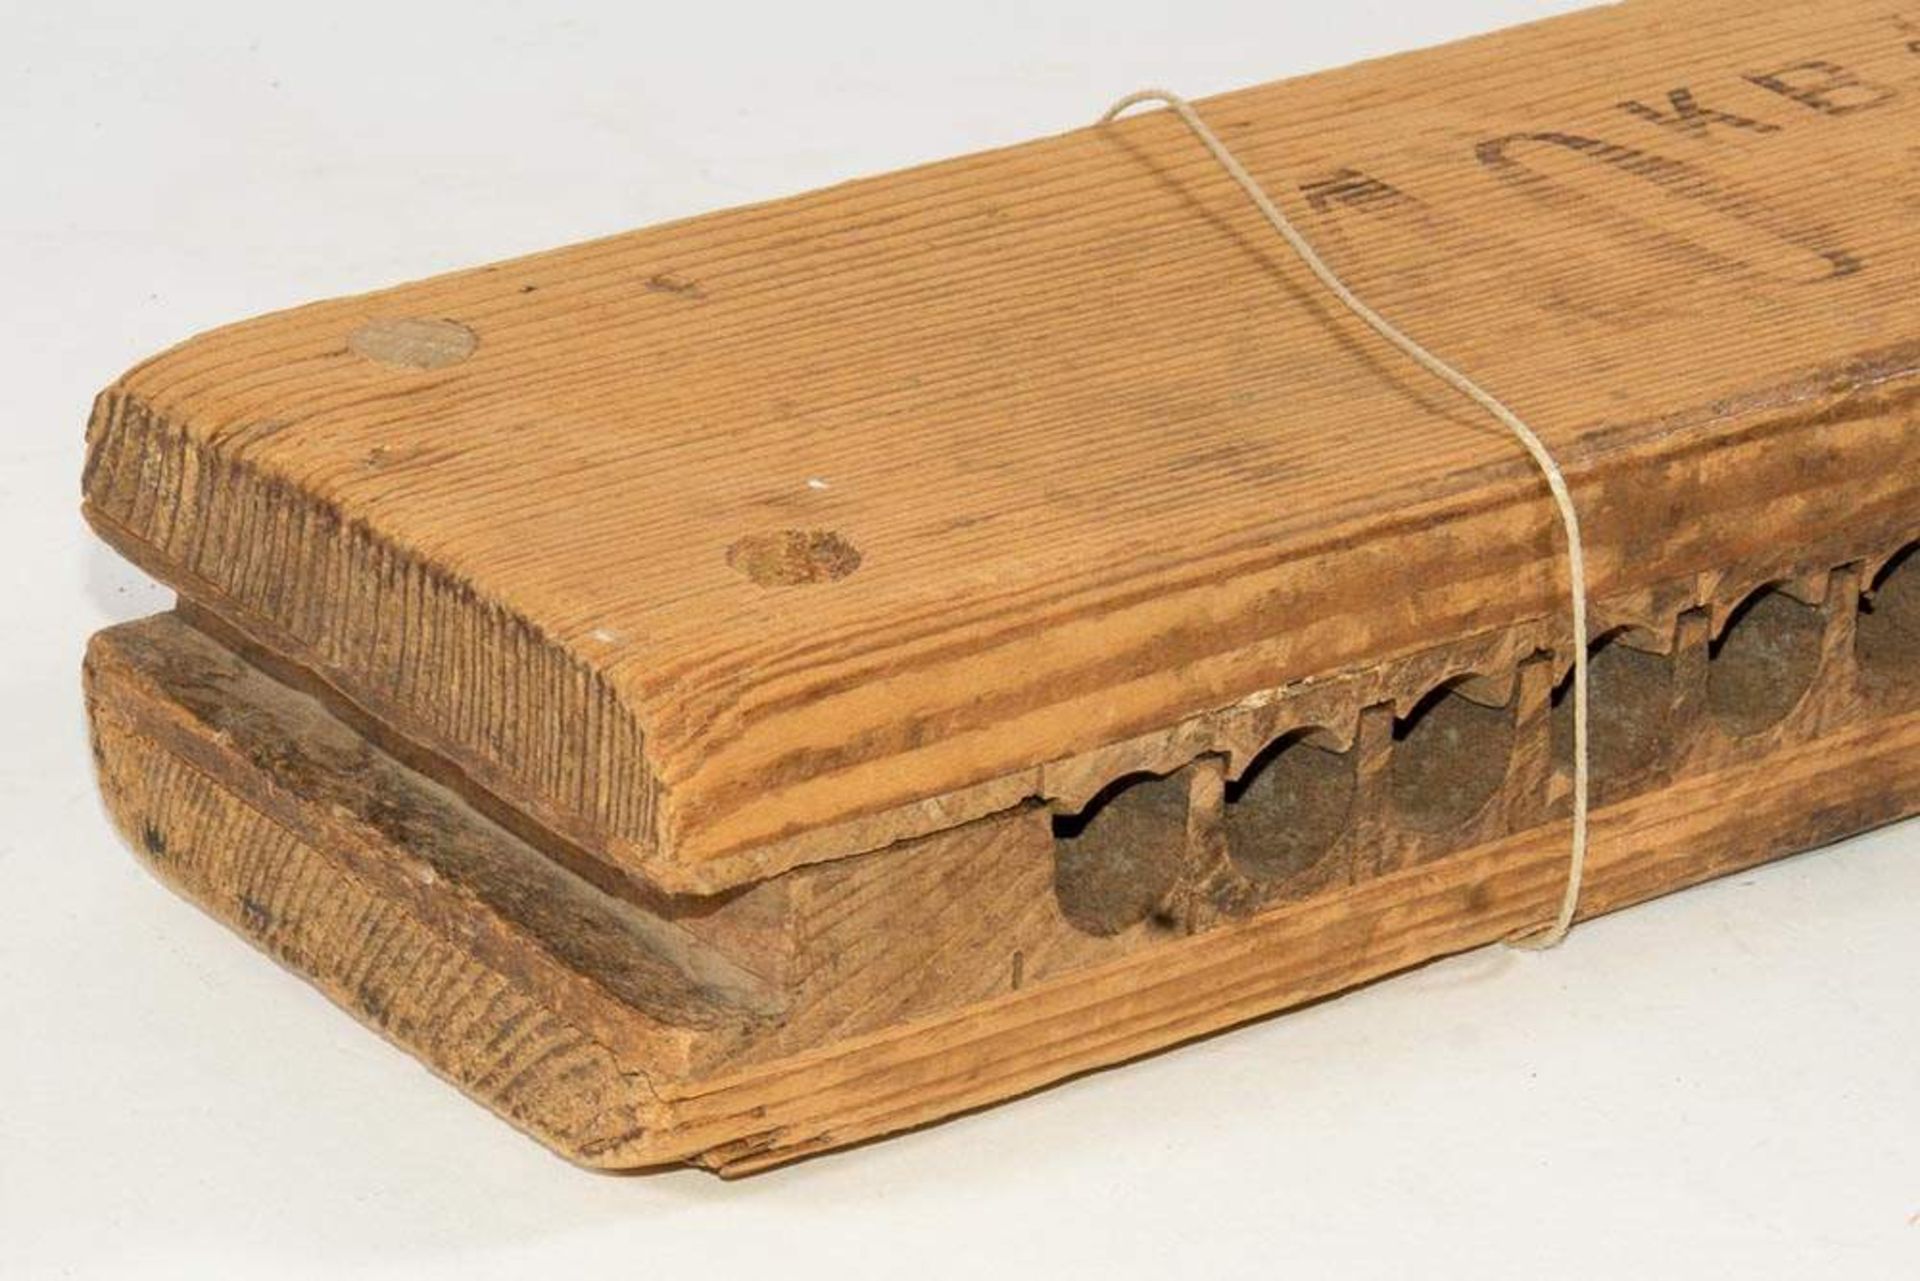 Zigarrenpresse. Holz. Bez. "K. B. & Co. 1930 -  No. 10466". Länge 57 cm. - Image 4 of 5